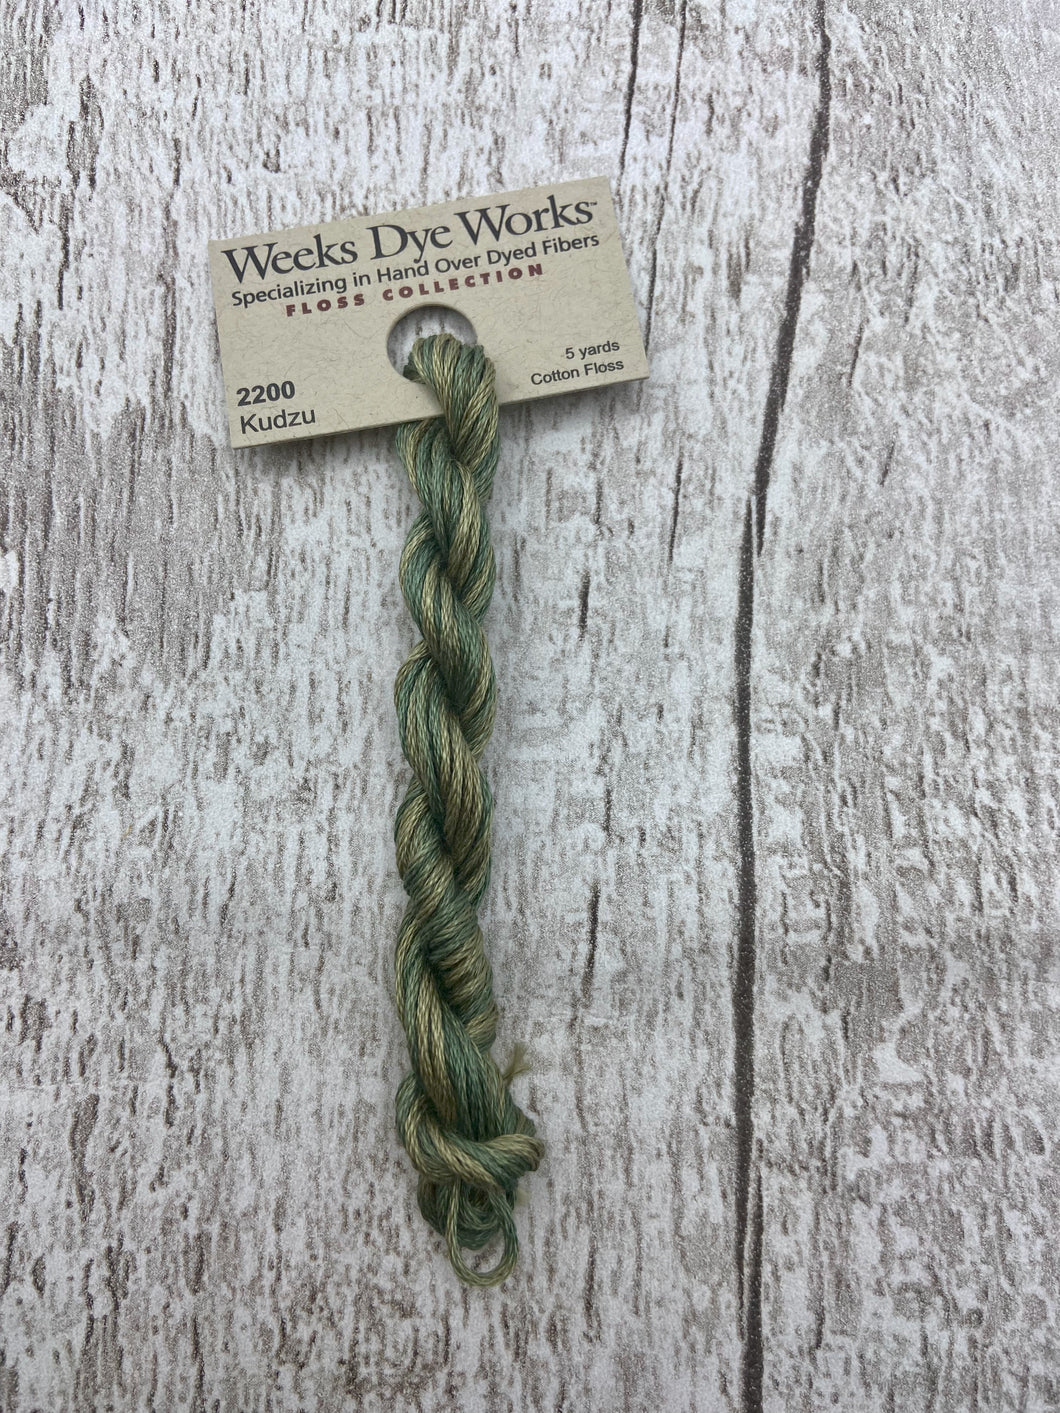 Kudzu (#2200) Weeks Dye Works, 6-strand cotton floss